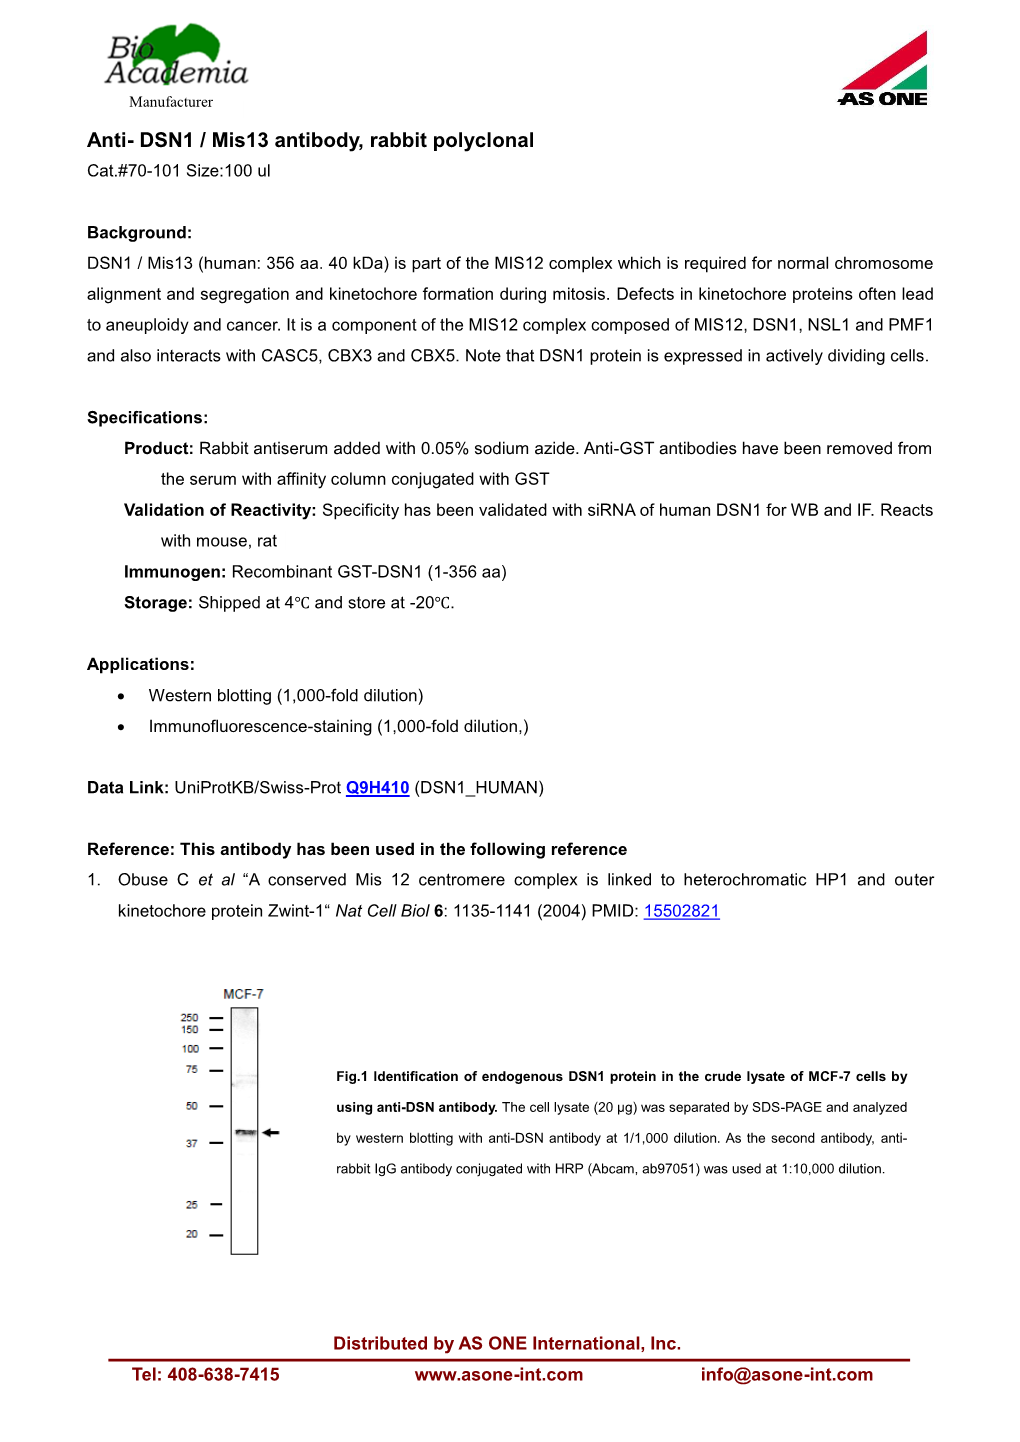 70-101 Anti-DSN1 Mis13 Antibody, Rabbit Polyclonal 03212018